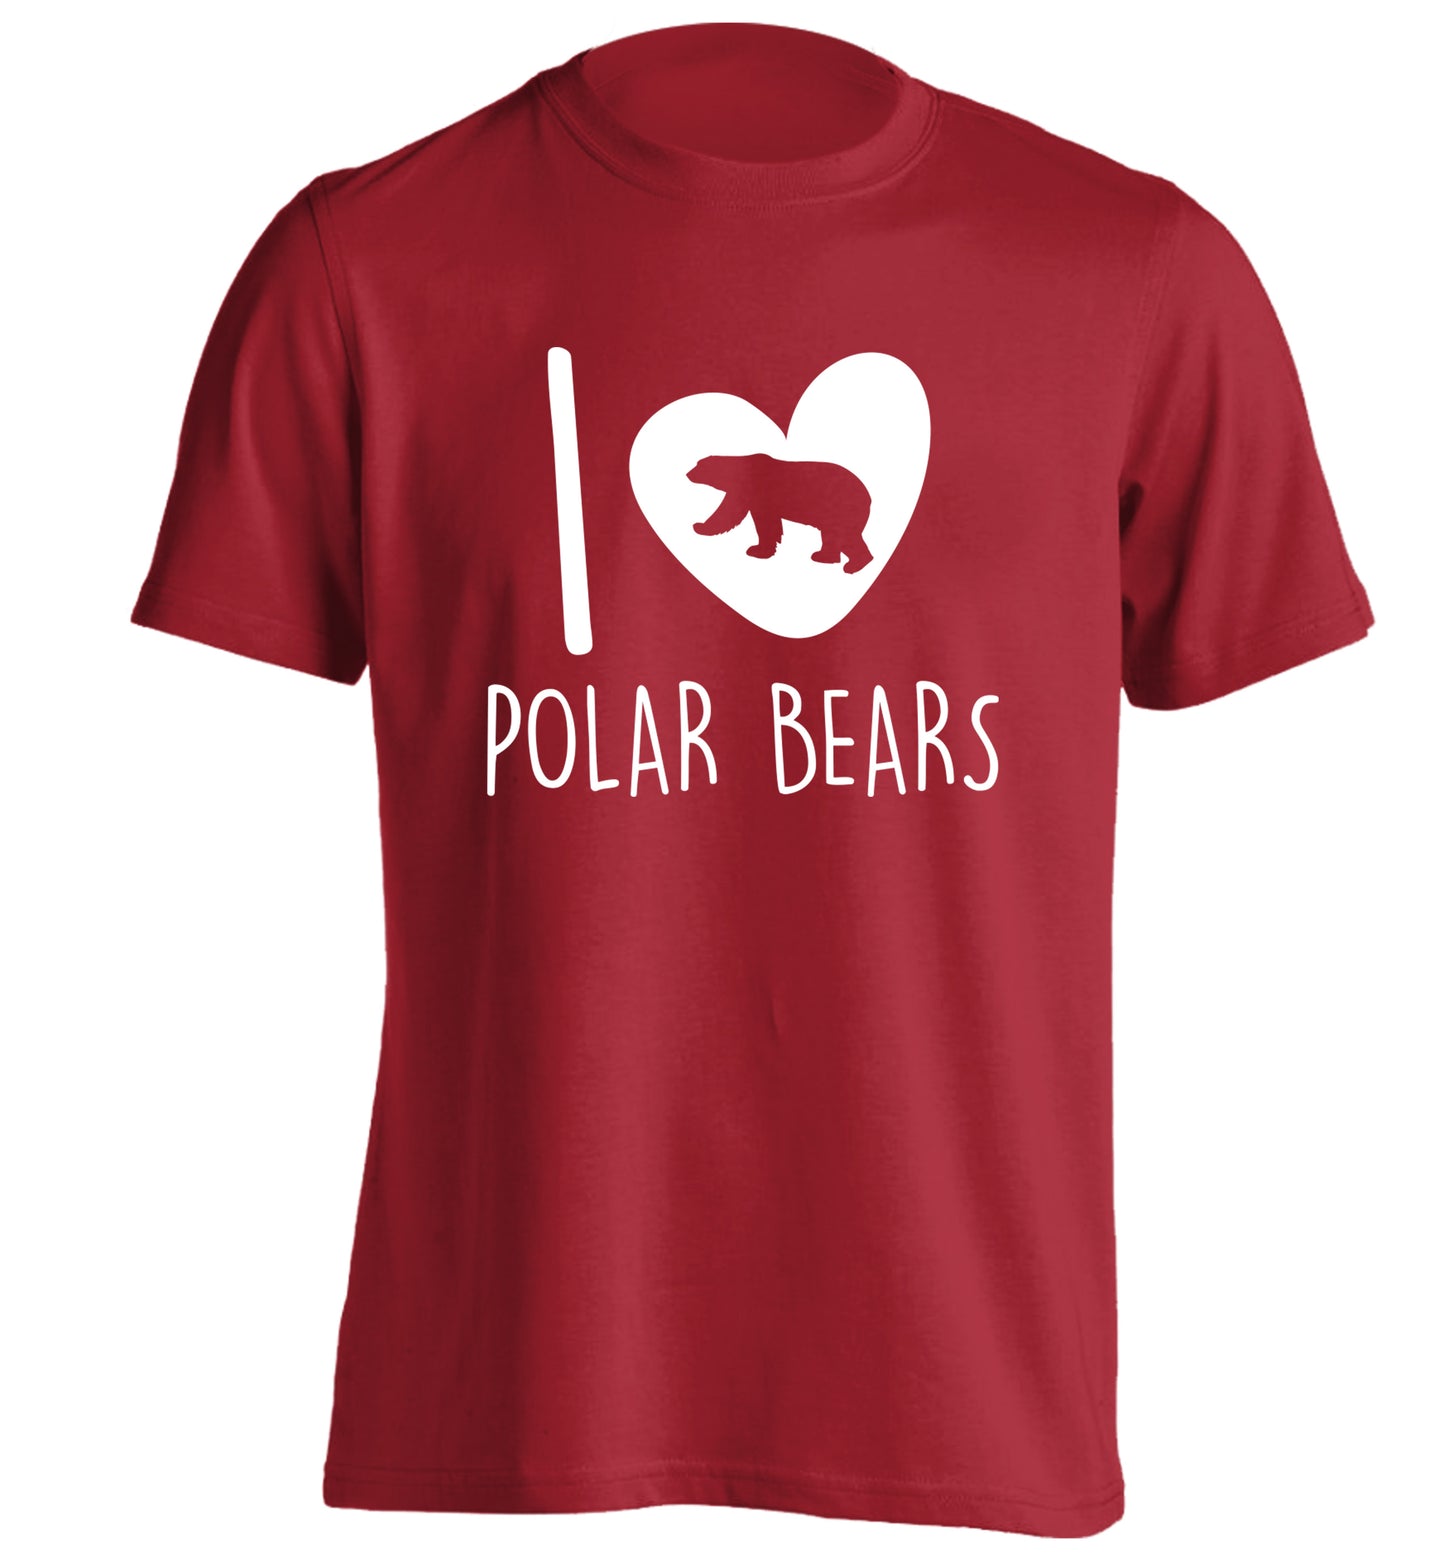 I Love Polar Bears adults unisex red Tshirt 2XL